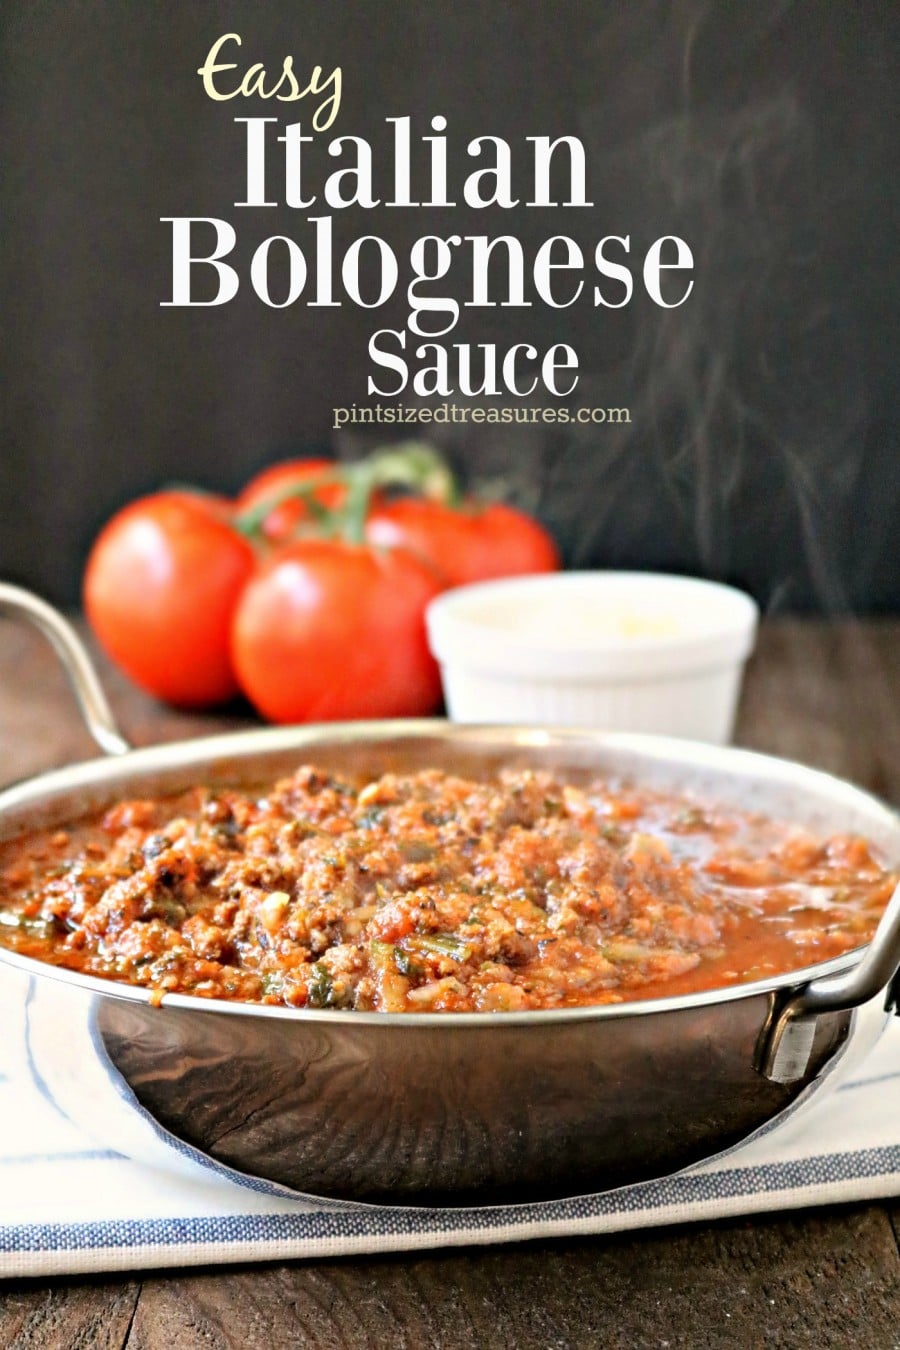 easy Italian bolognese sauce recipe